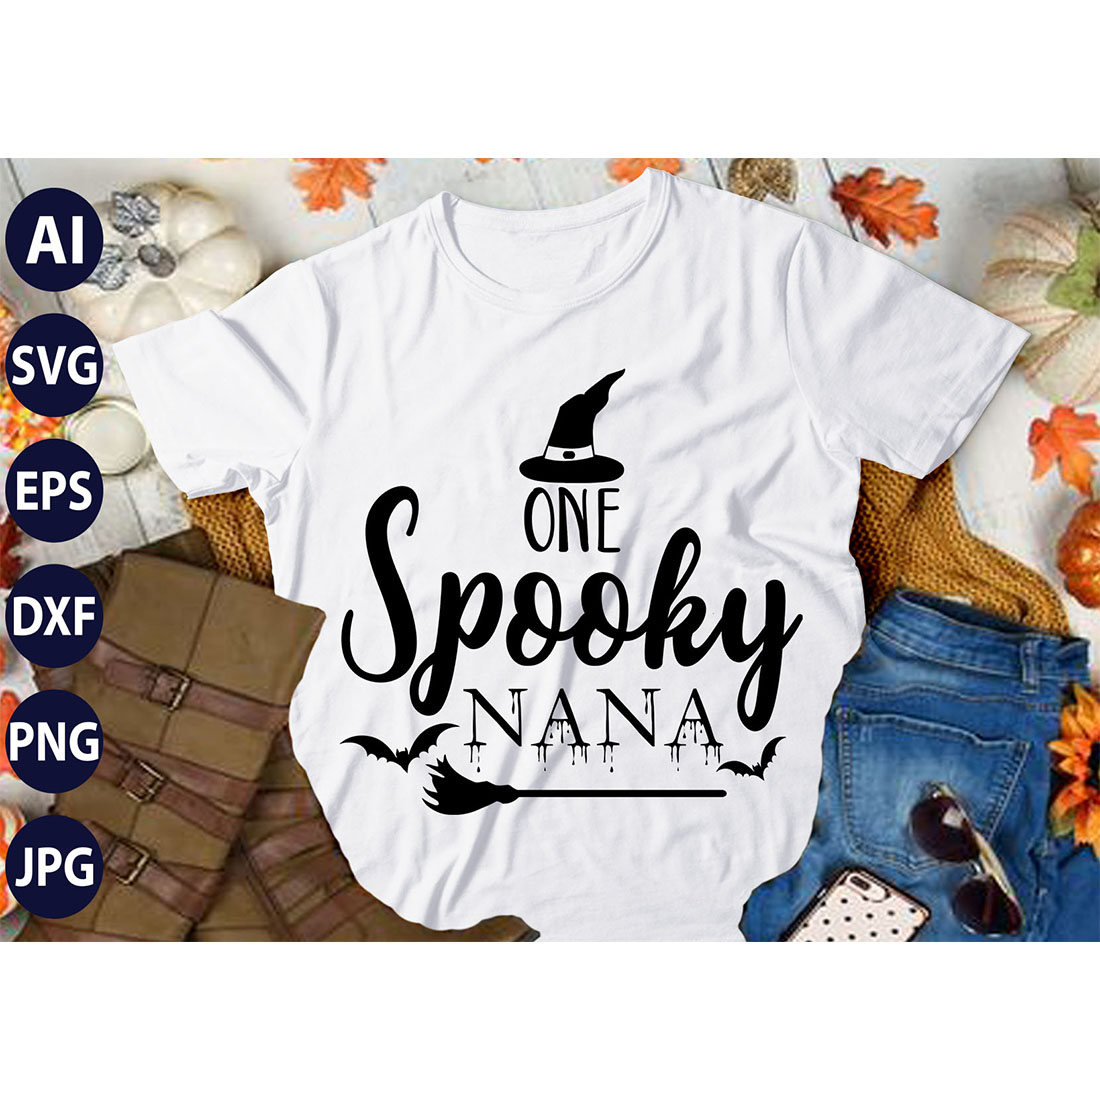 One Spooky Nana, SVG T-Shirt Design |Happy Halloween & Pumpkin T-Shirt Design | Ai, Svg, Eps, Dxf, Jpeg, Png, Instant download T-Shirt | 100% print-ready Digital vector file preview image.